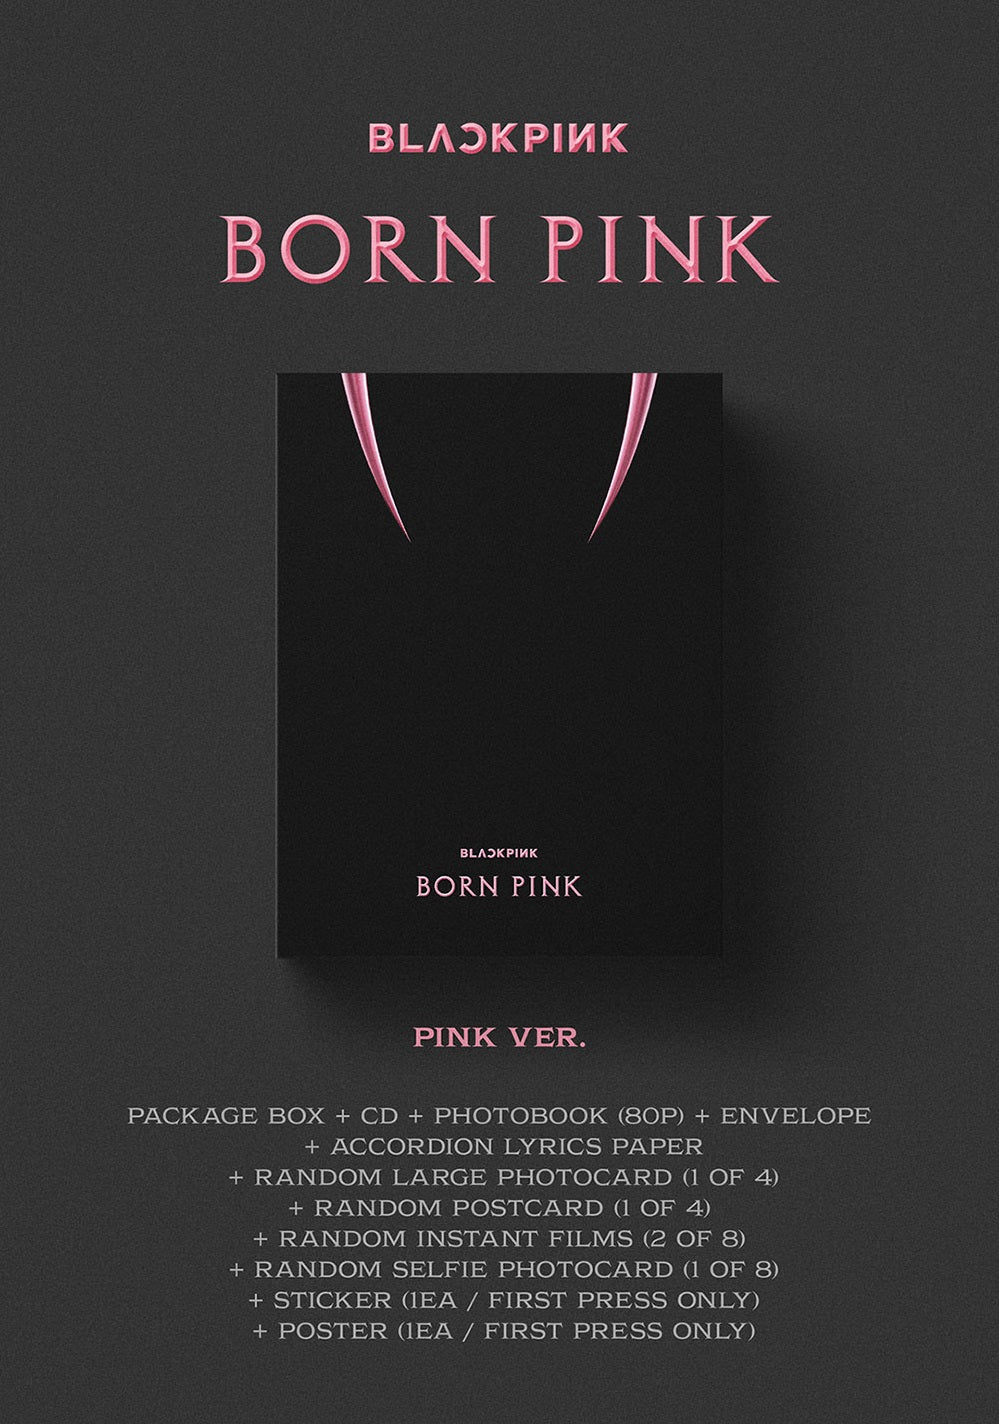 Cheap BLACKPINK 2nd Album BORN PINK BOX SET ver.